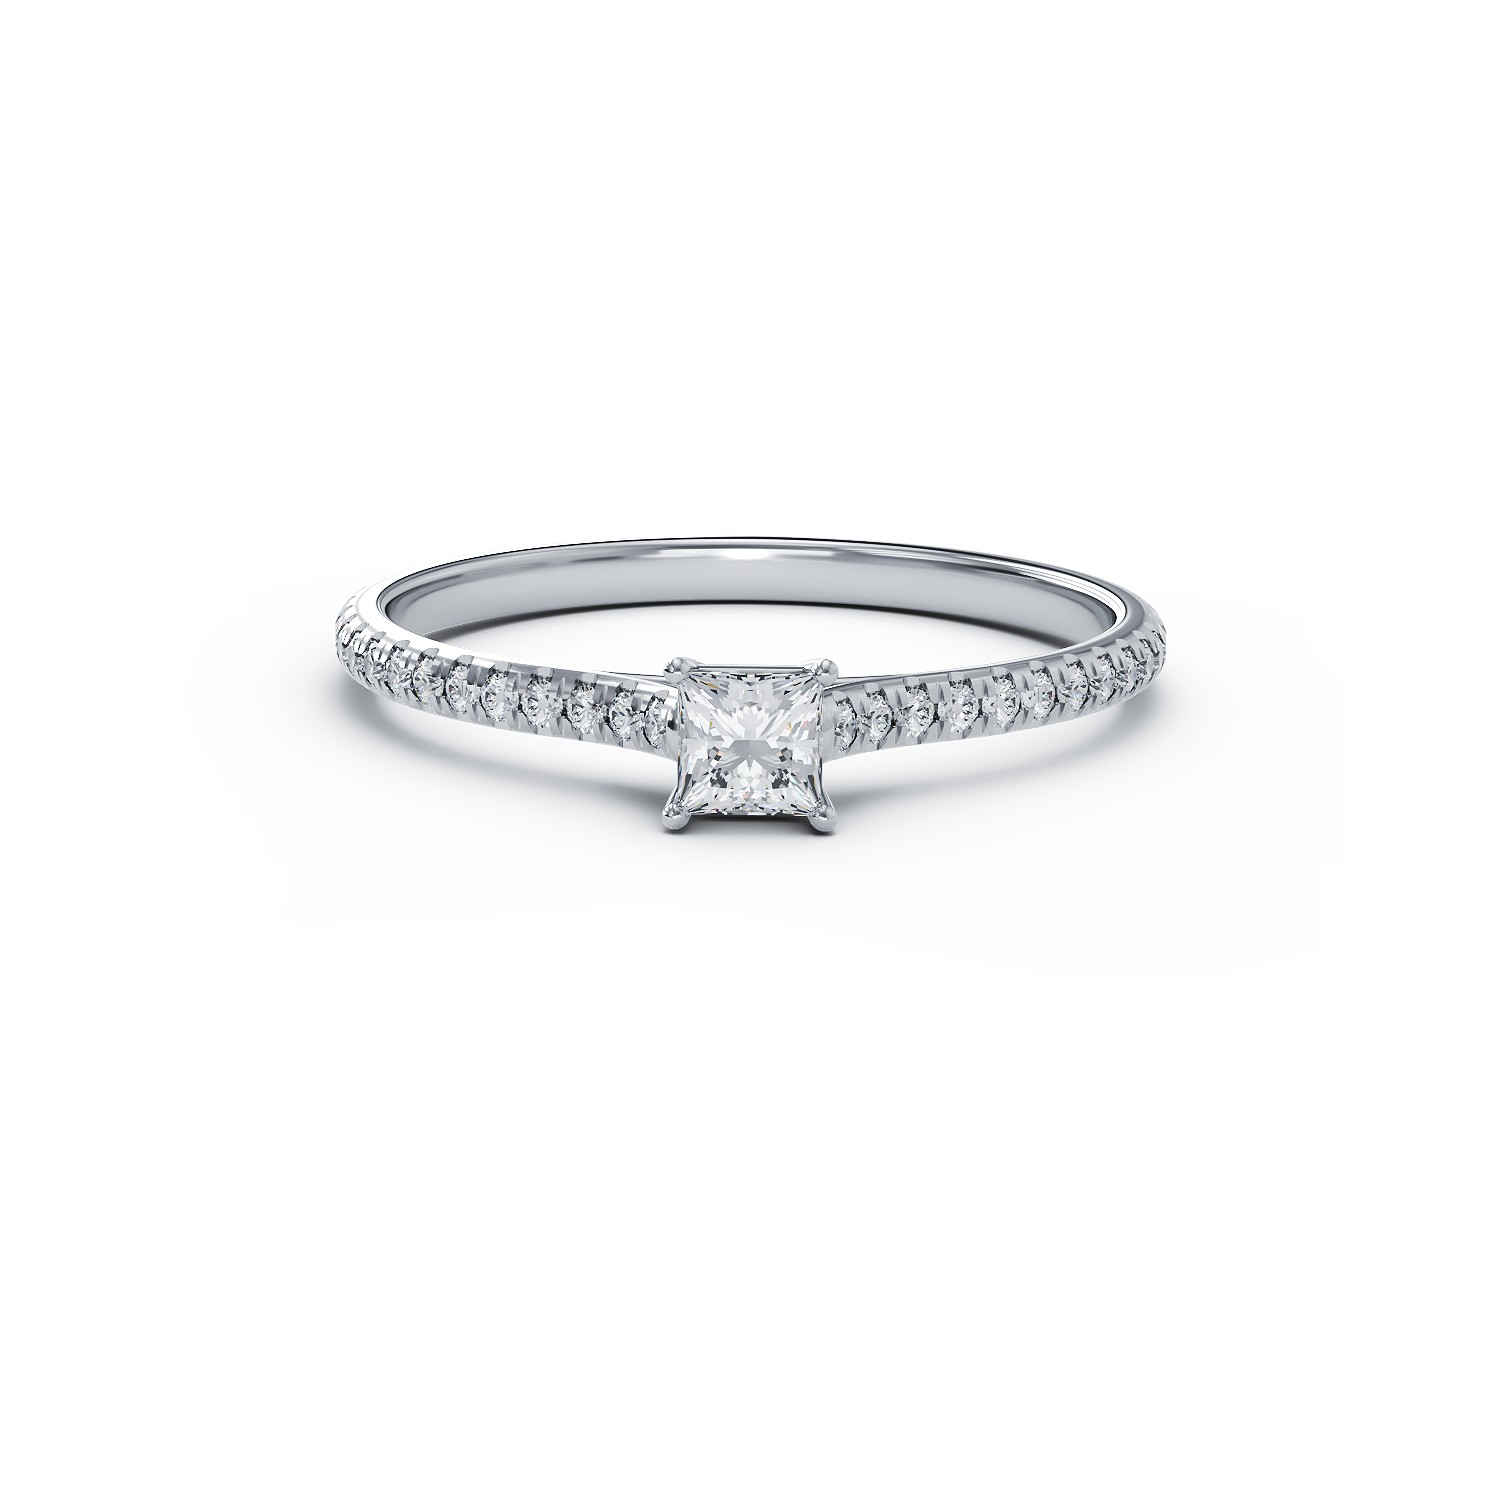 Platinum engagement ring with 0.2ct diamond and 0.16ct diamonds